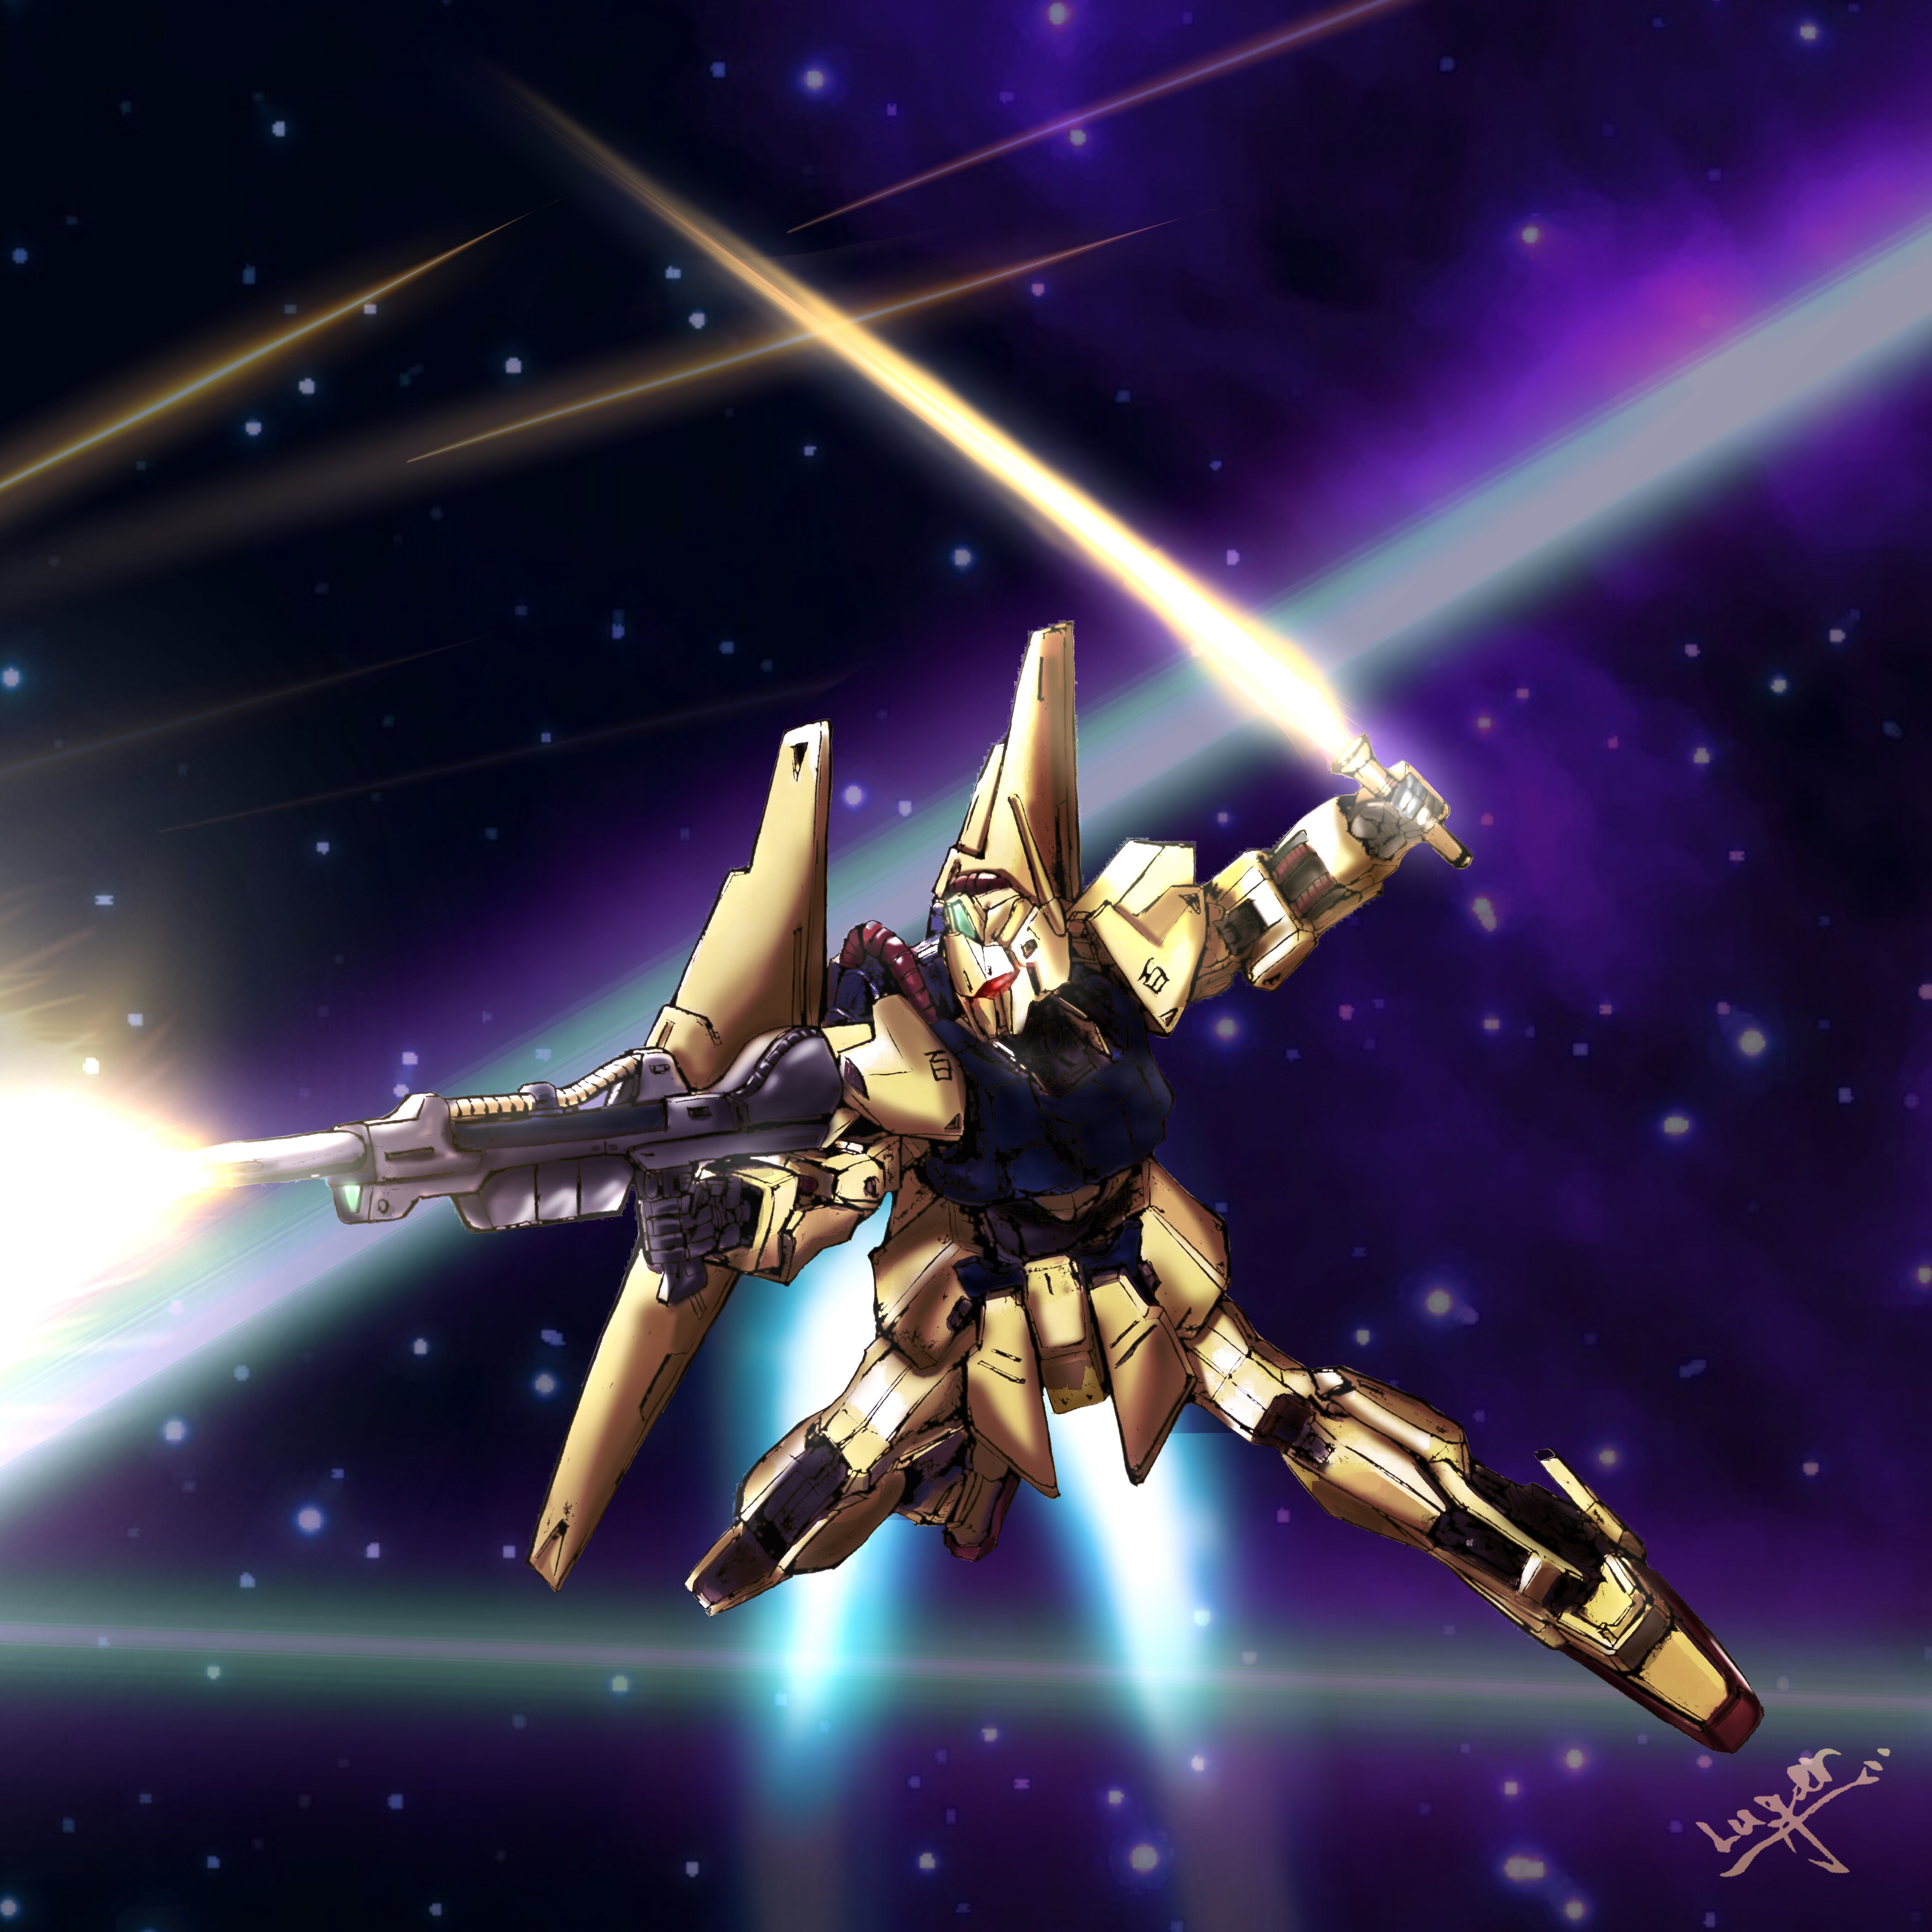 Anime Mechs Super Robot Wars Mobile Suit Zeta Gundam Hyaku Shiki Mobile Suit Artwork Digital Art Fan 4200x4200